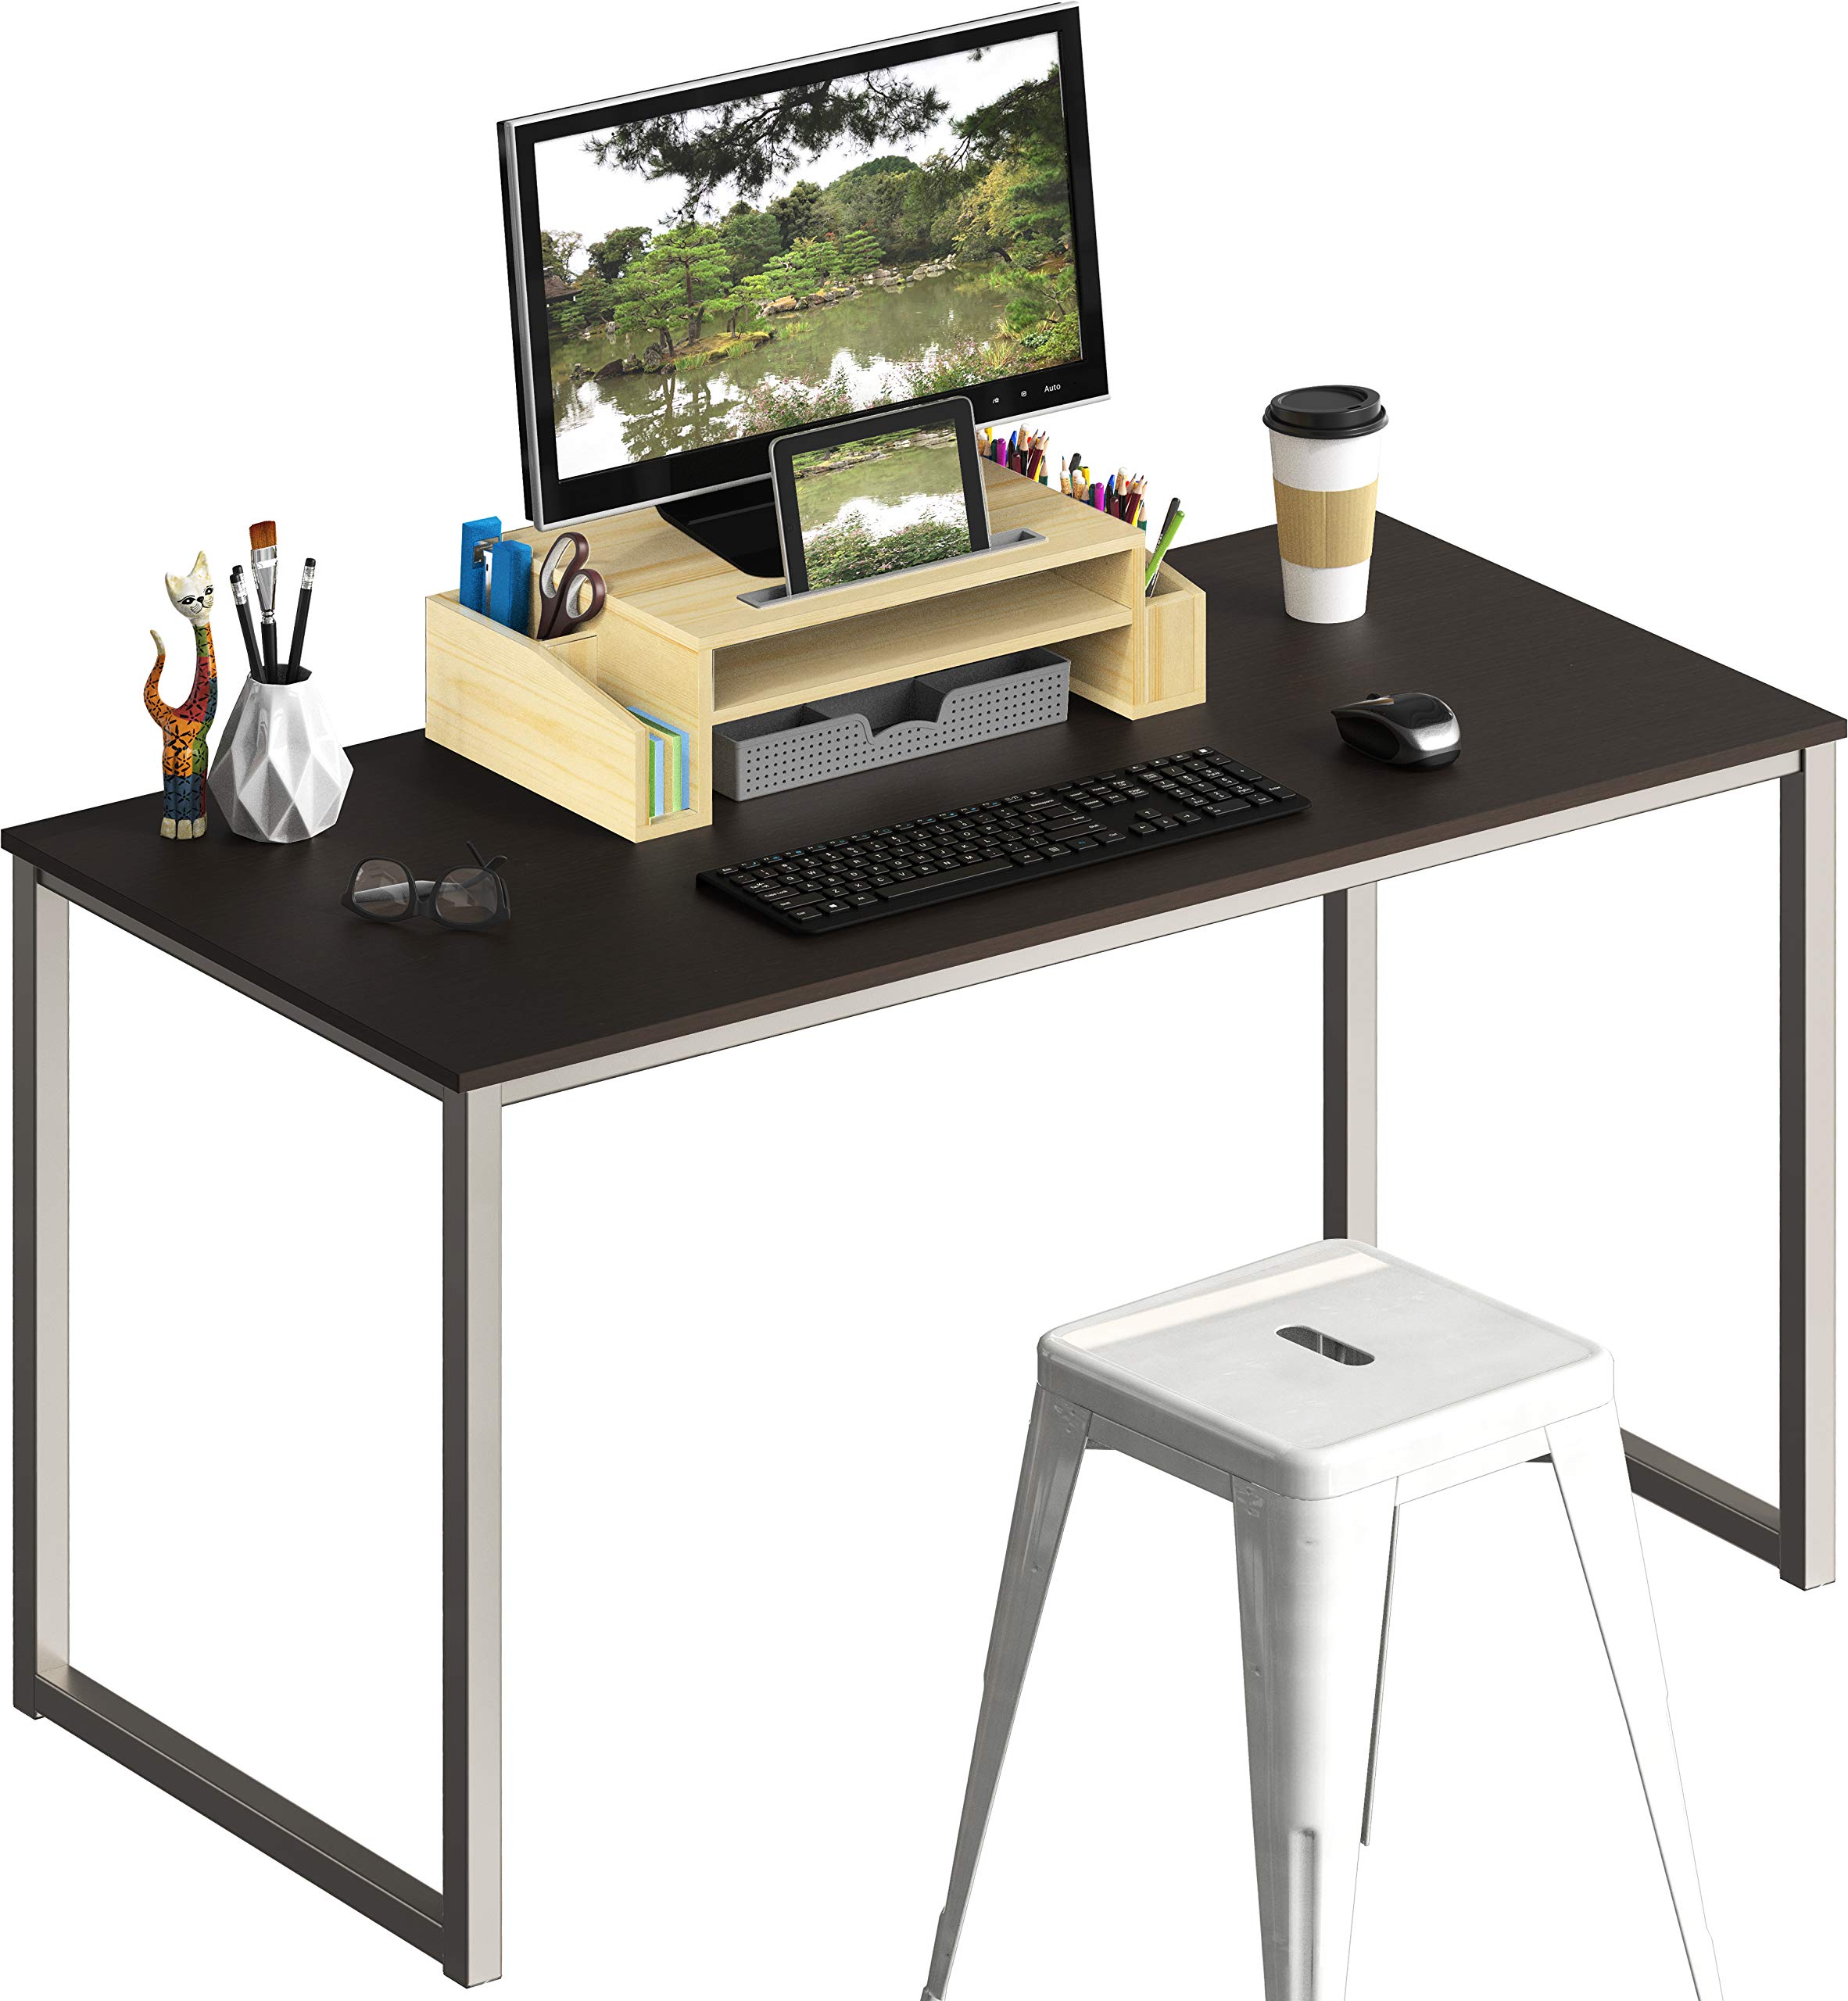 Mission 40 inches office desk, Espresso - image 3 of 5